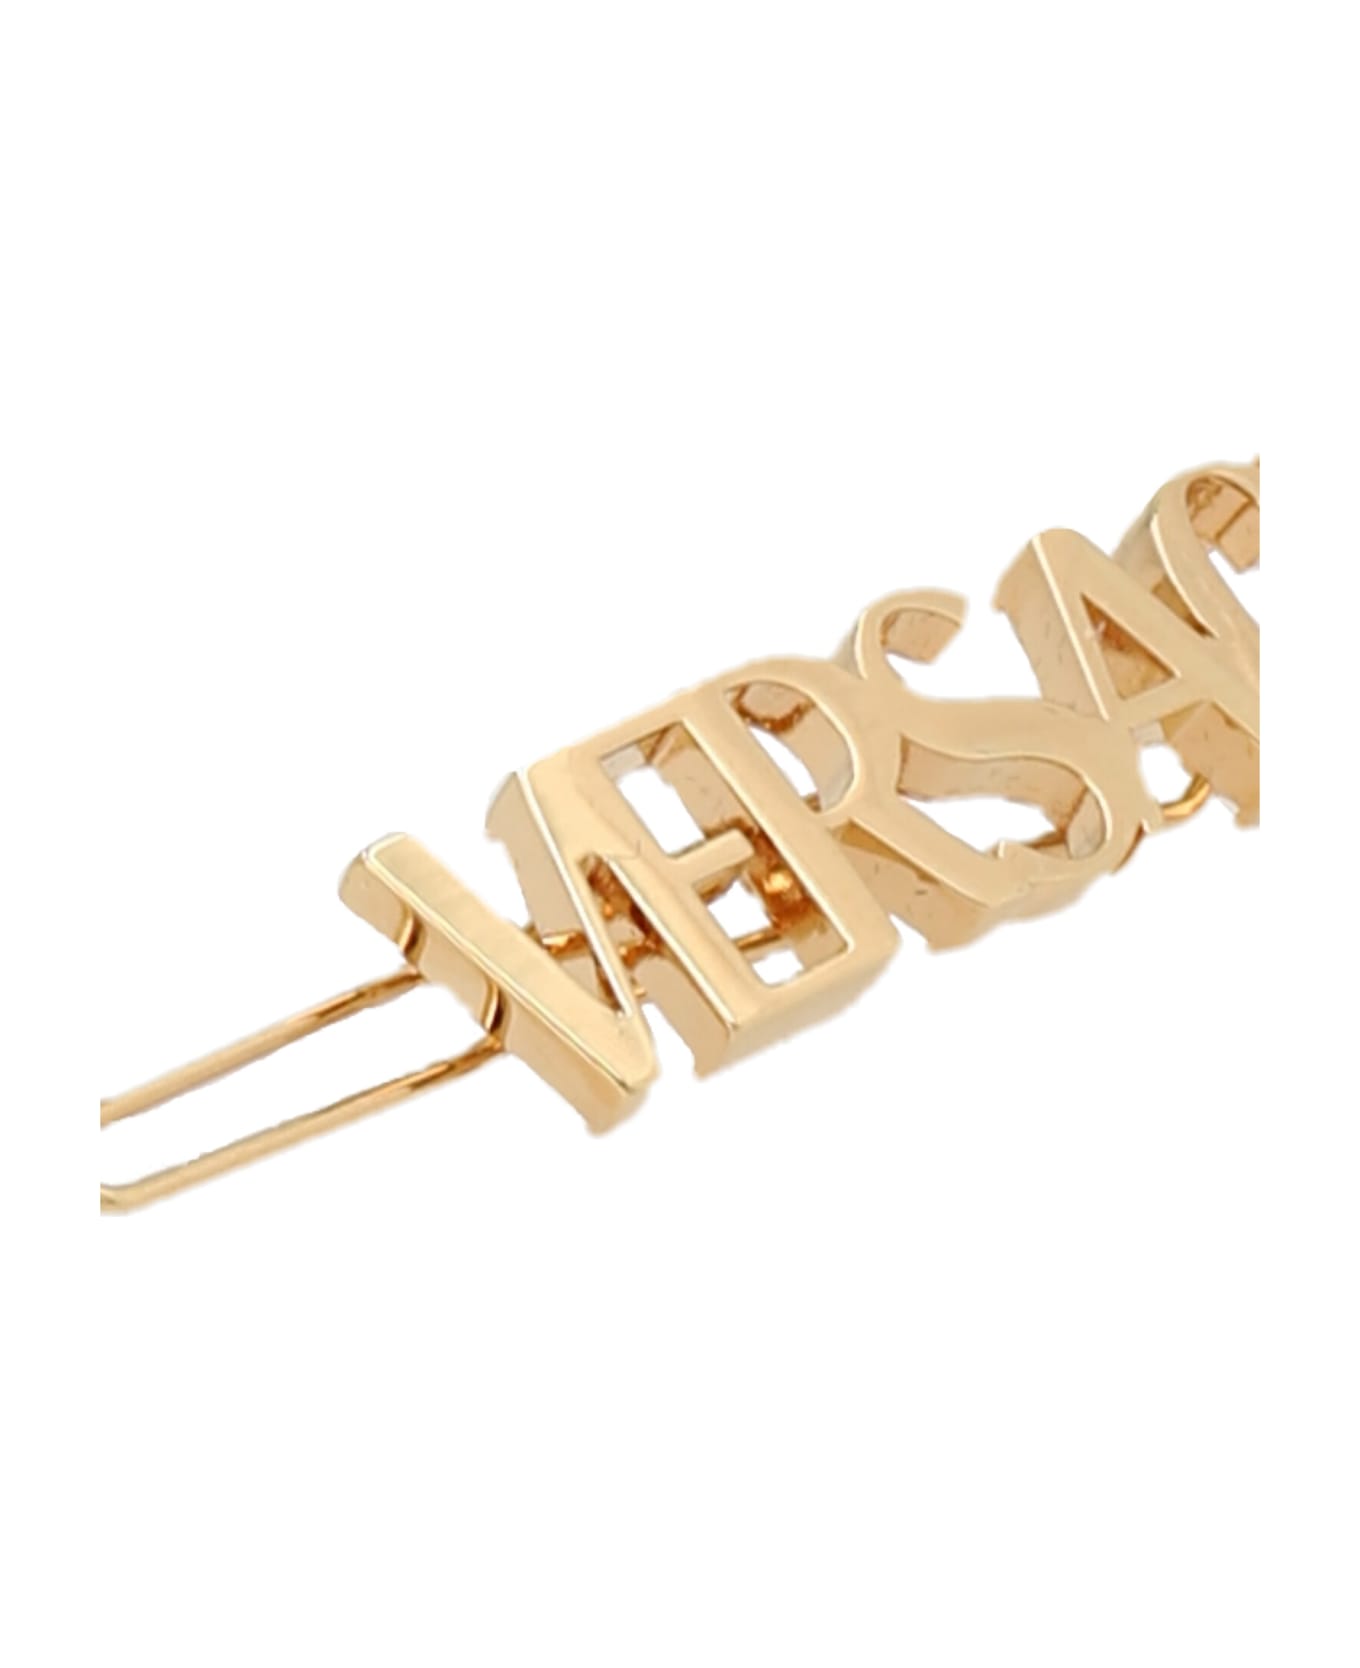 Versace Logo Pin - Gold